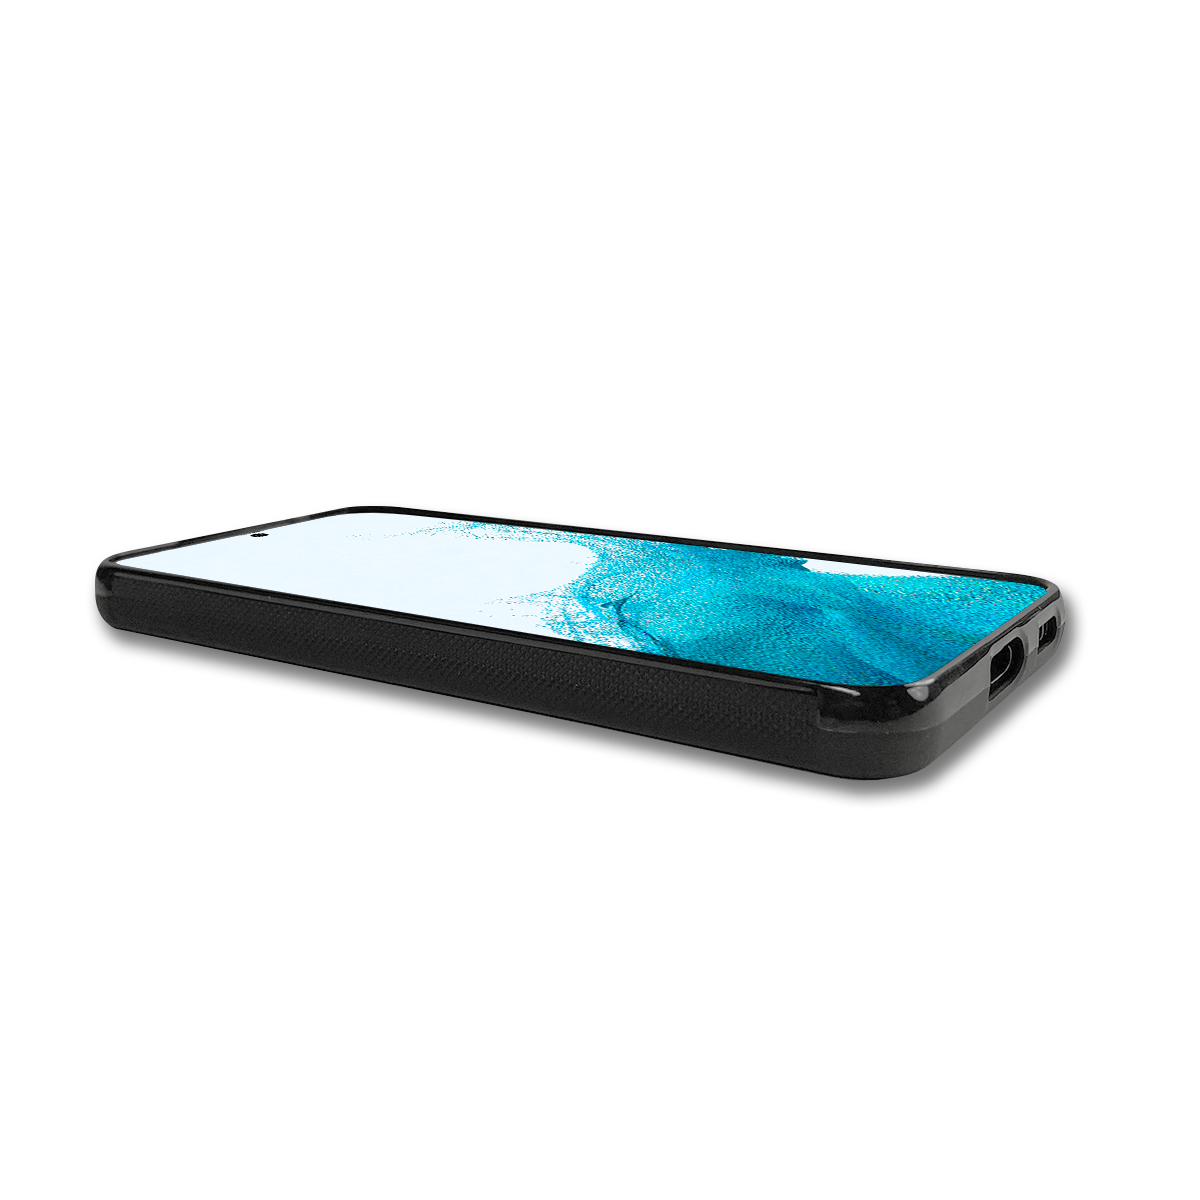 Samsung Galaxy S22 — Shell Explorer Case